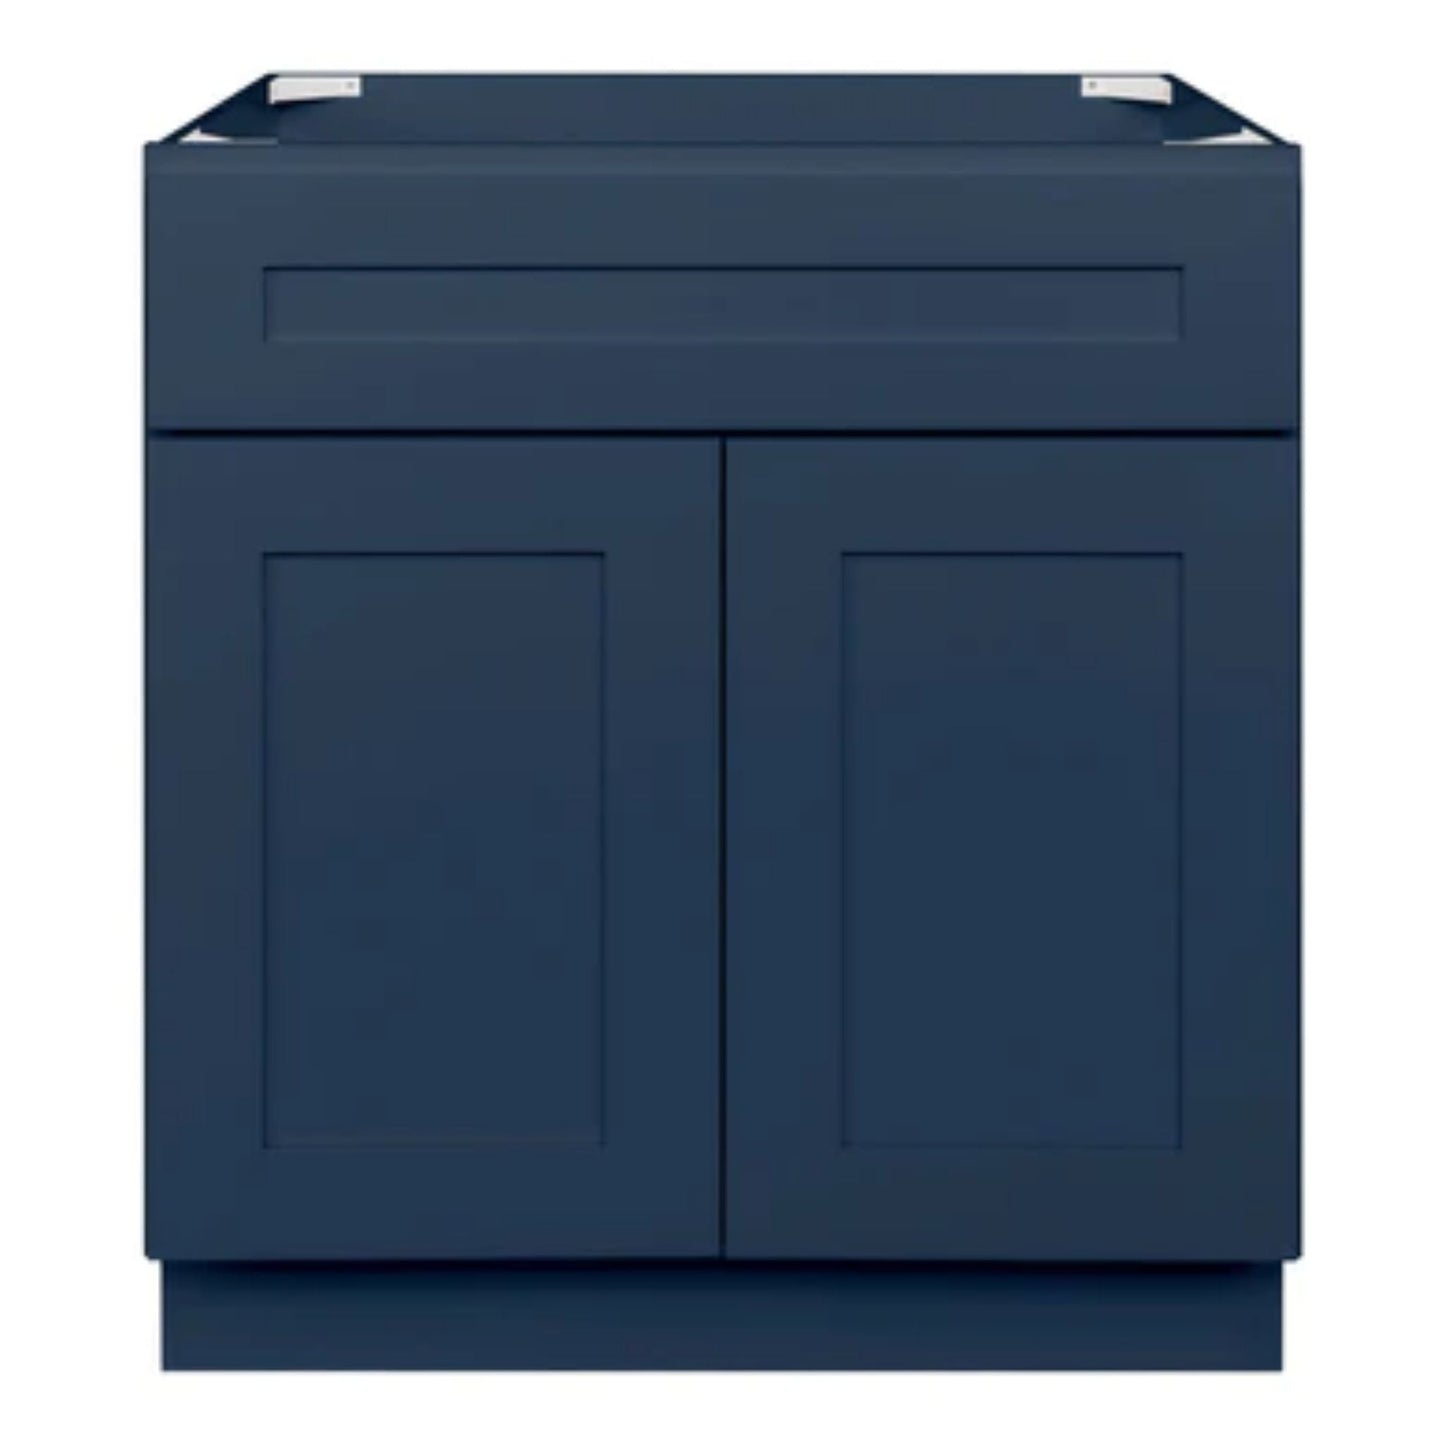 LessCare 30" x 34.5" x 21" Danbury Blue Vanity Sink Base Cabinet